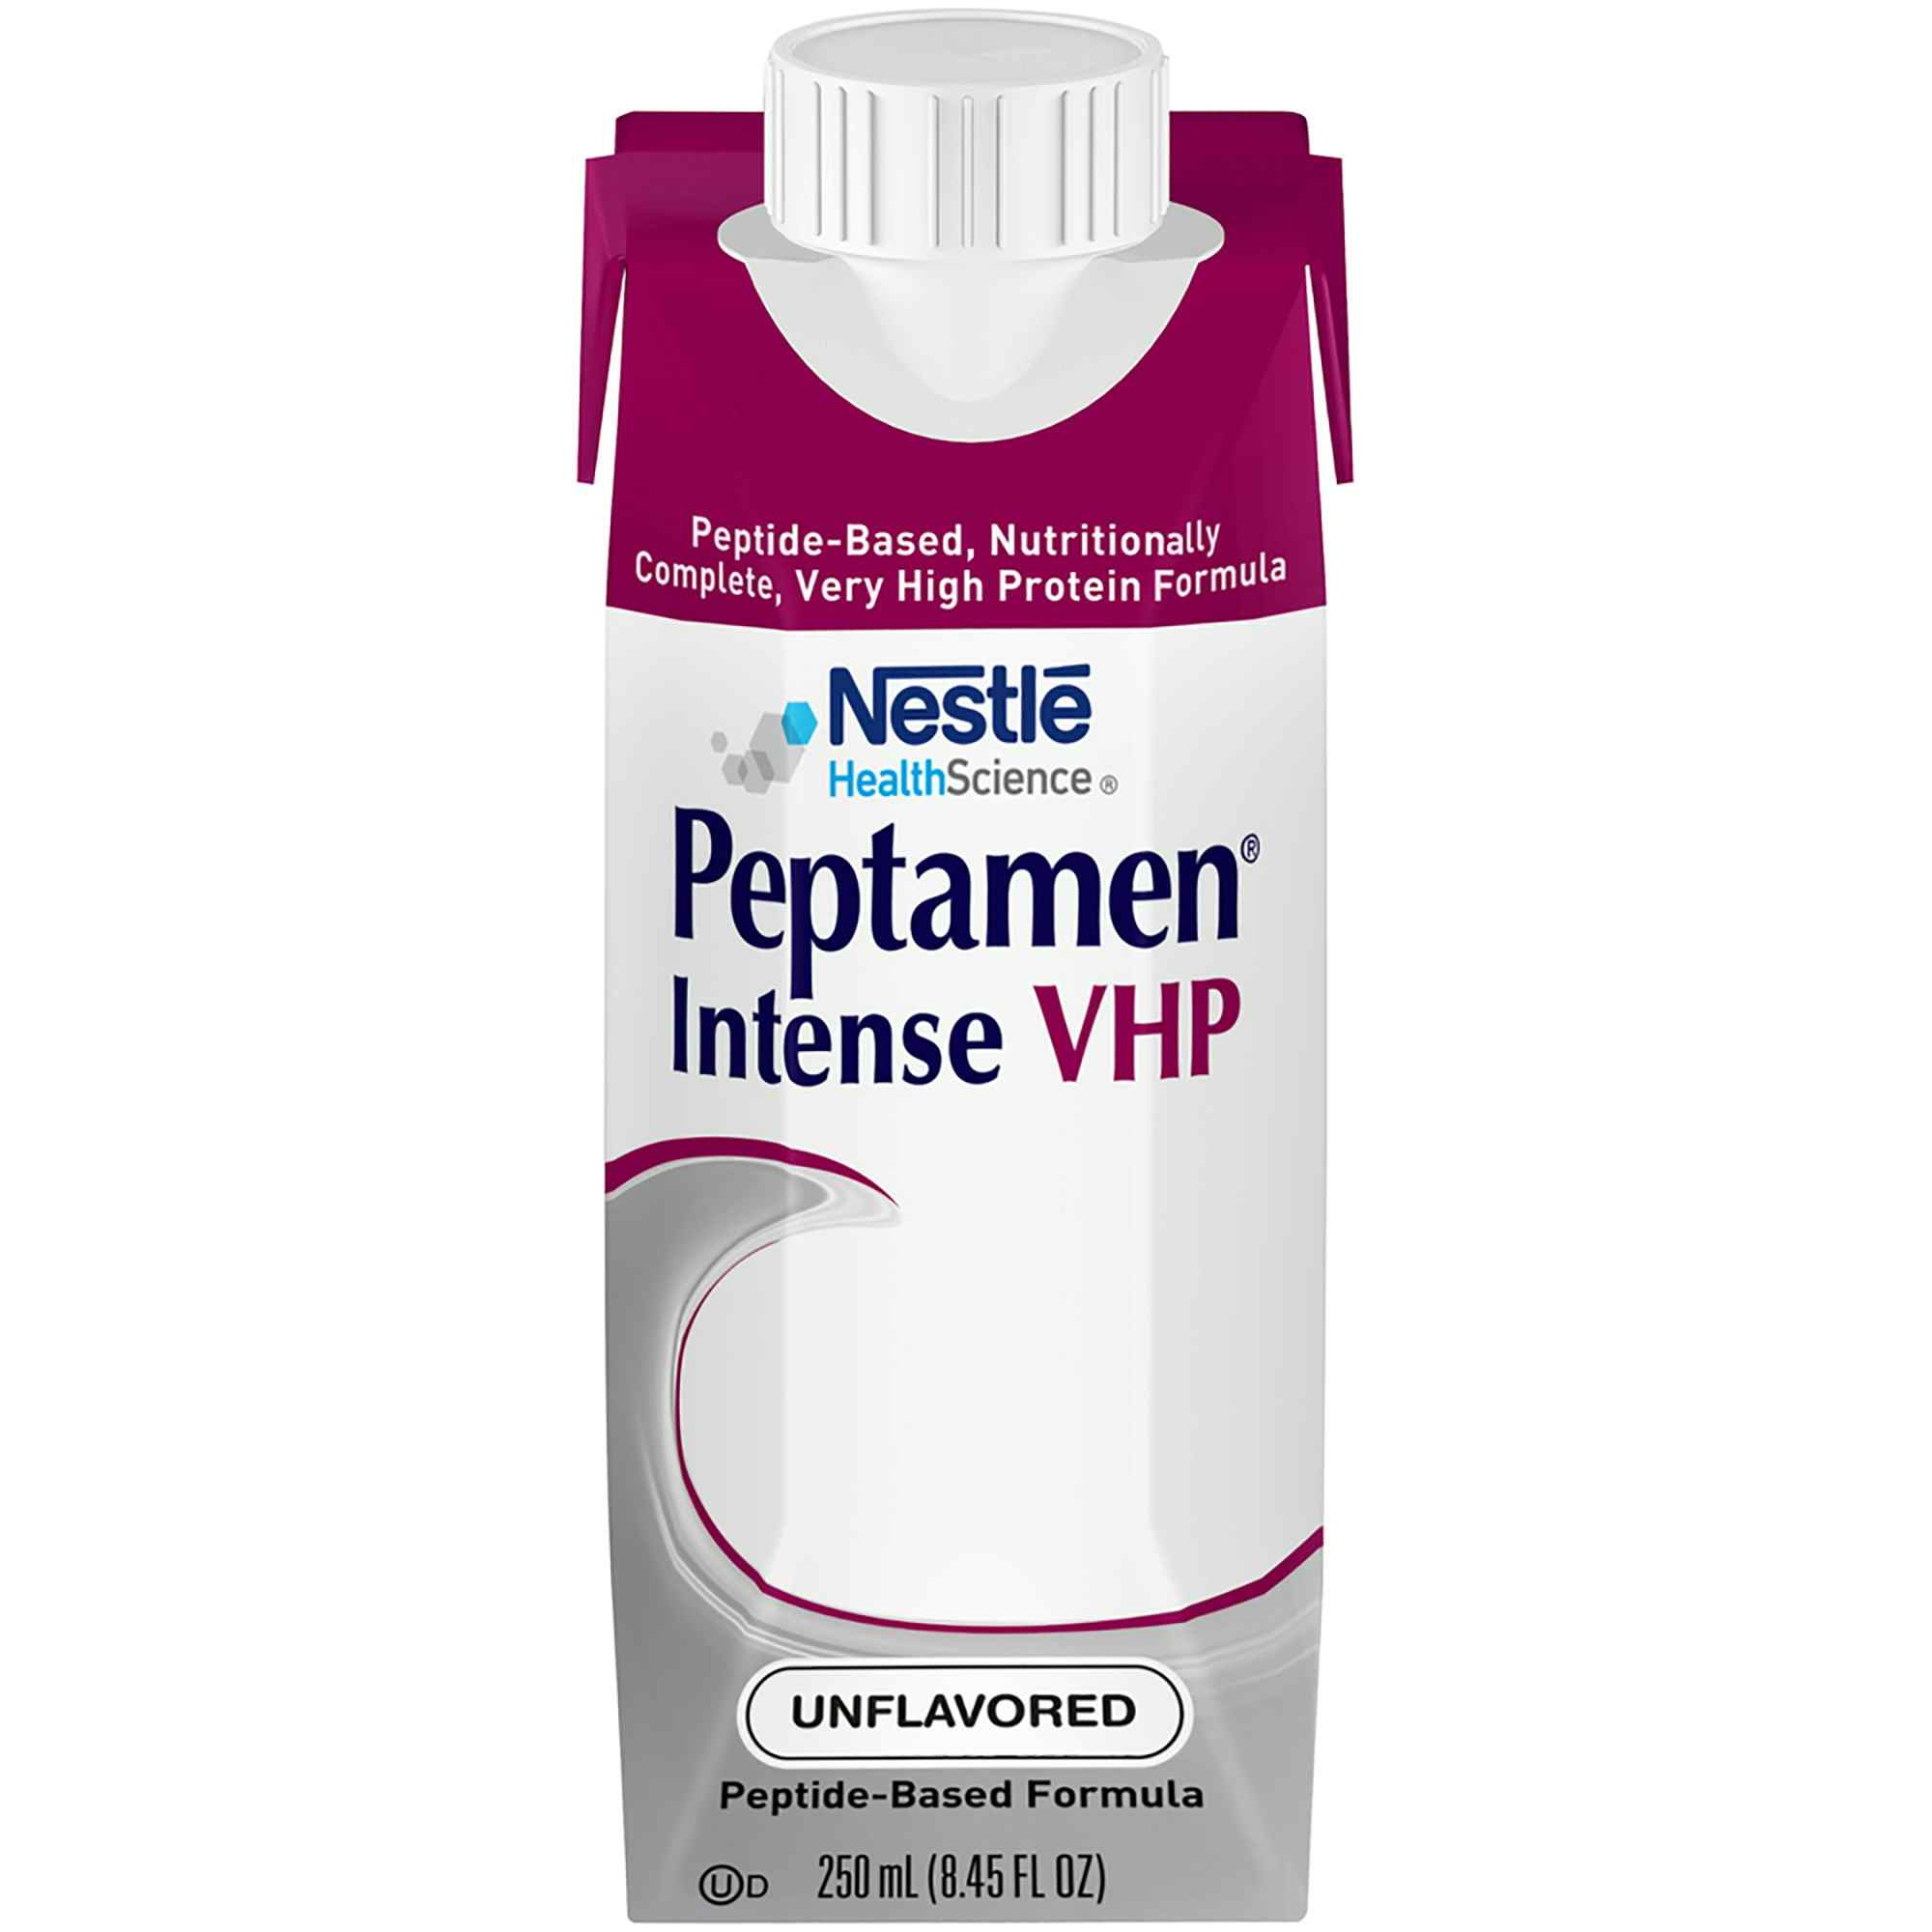 Nestle HealthScience Peptamen Intense VHP Peptide-Based Very High Protein Complete Nutrition Tube Feeding Formula, 8.45 oz., 00043900432717, Case of 24